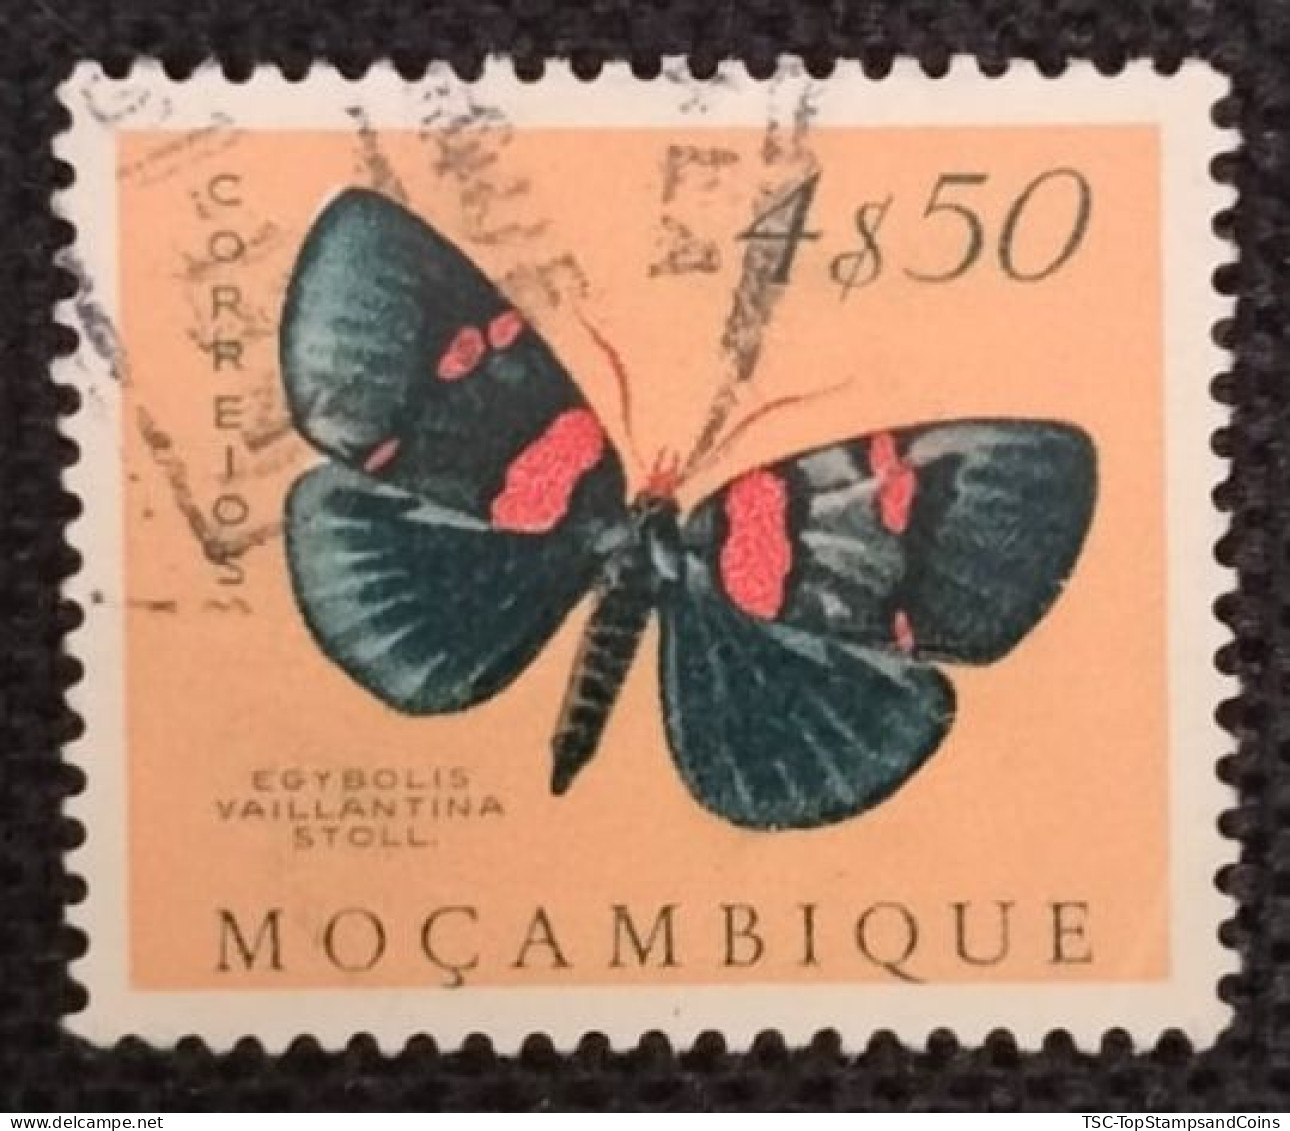 MOZPO0402UA - Mozambique Butterflies - 4$50 Used Stamp - Mozambique - 1953 - Mosambik